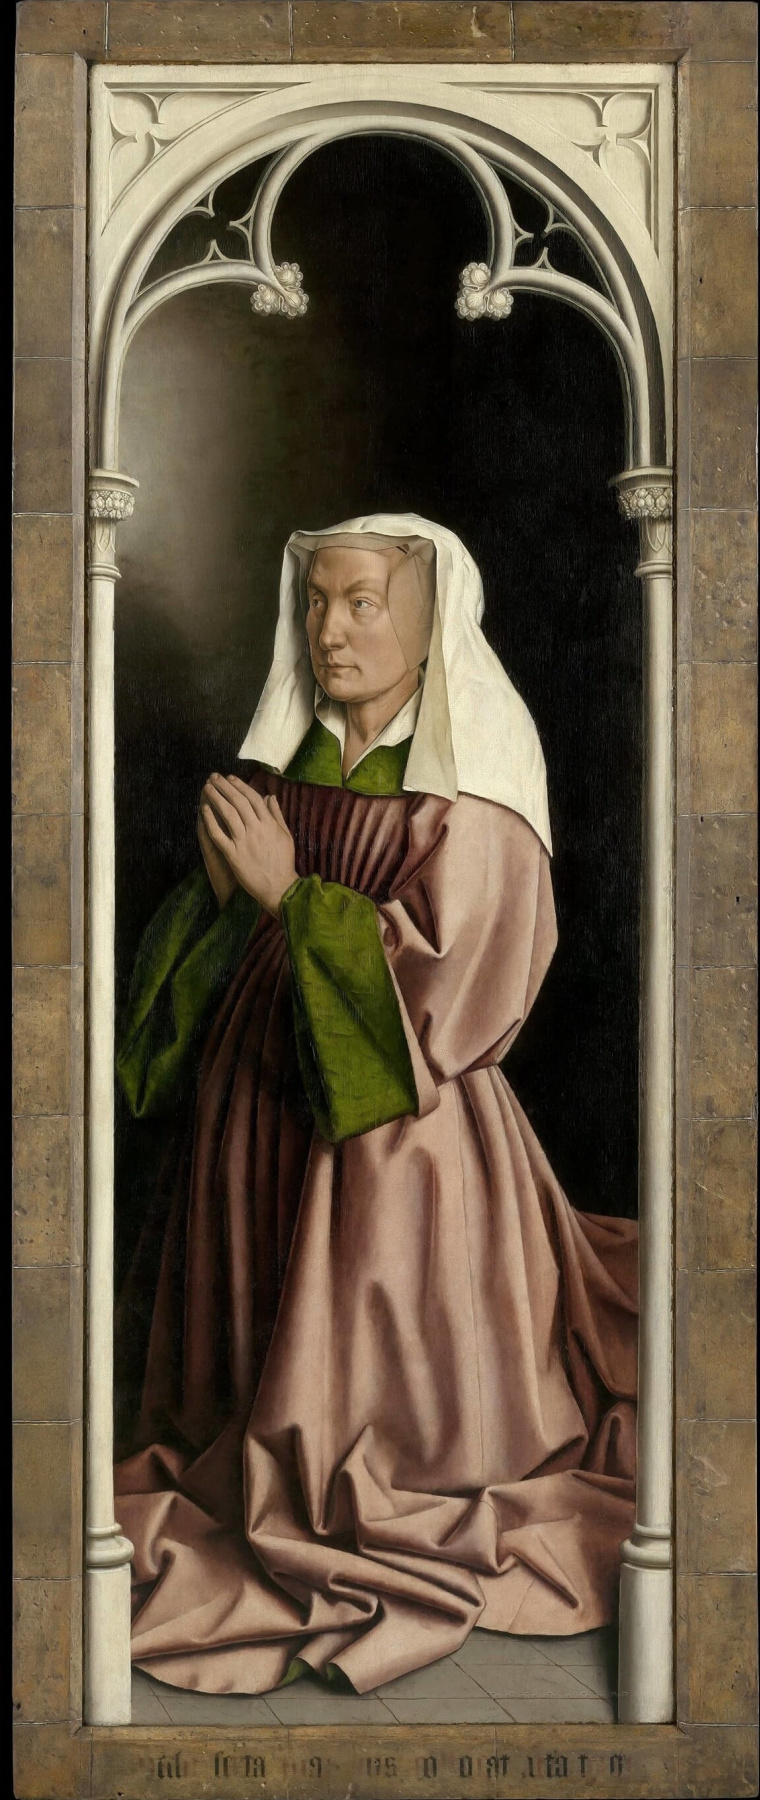 Jan van Eyck. Le retable de gand fermés vantaux. Femme донатора (fragment)